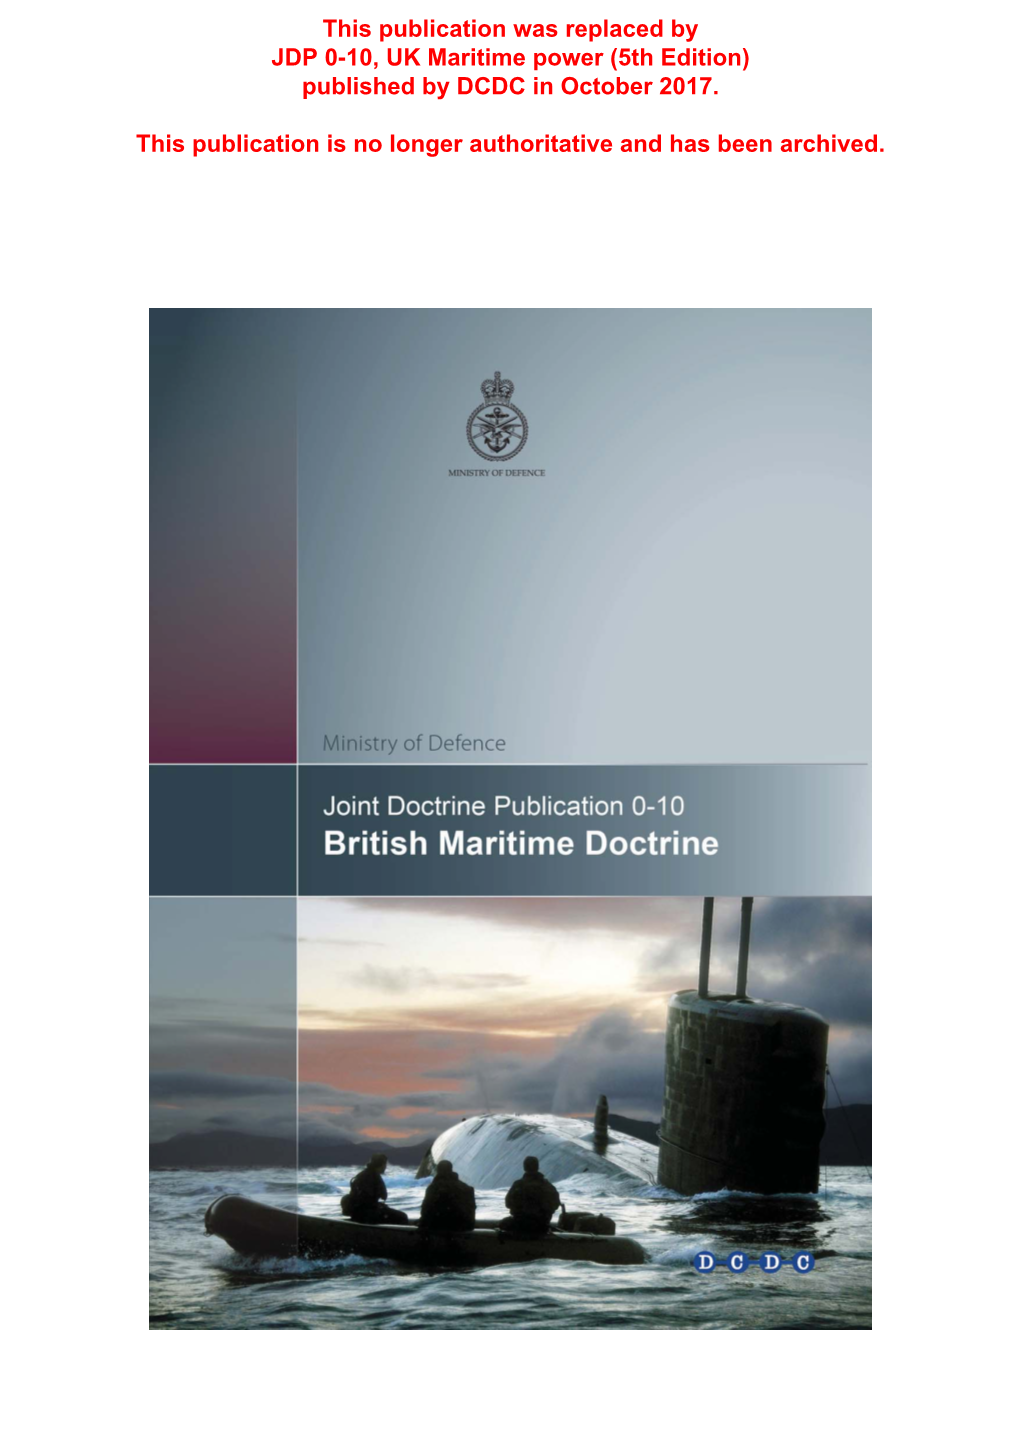 JDP 0-10, British Maritime Doctrine